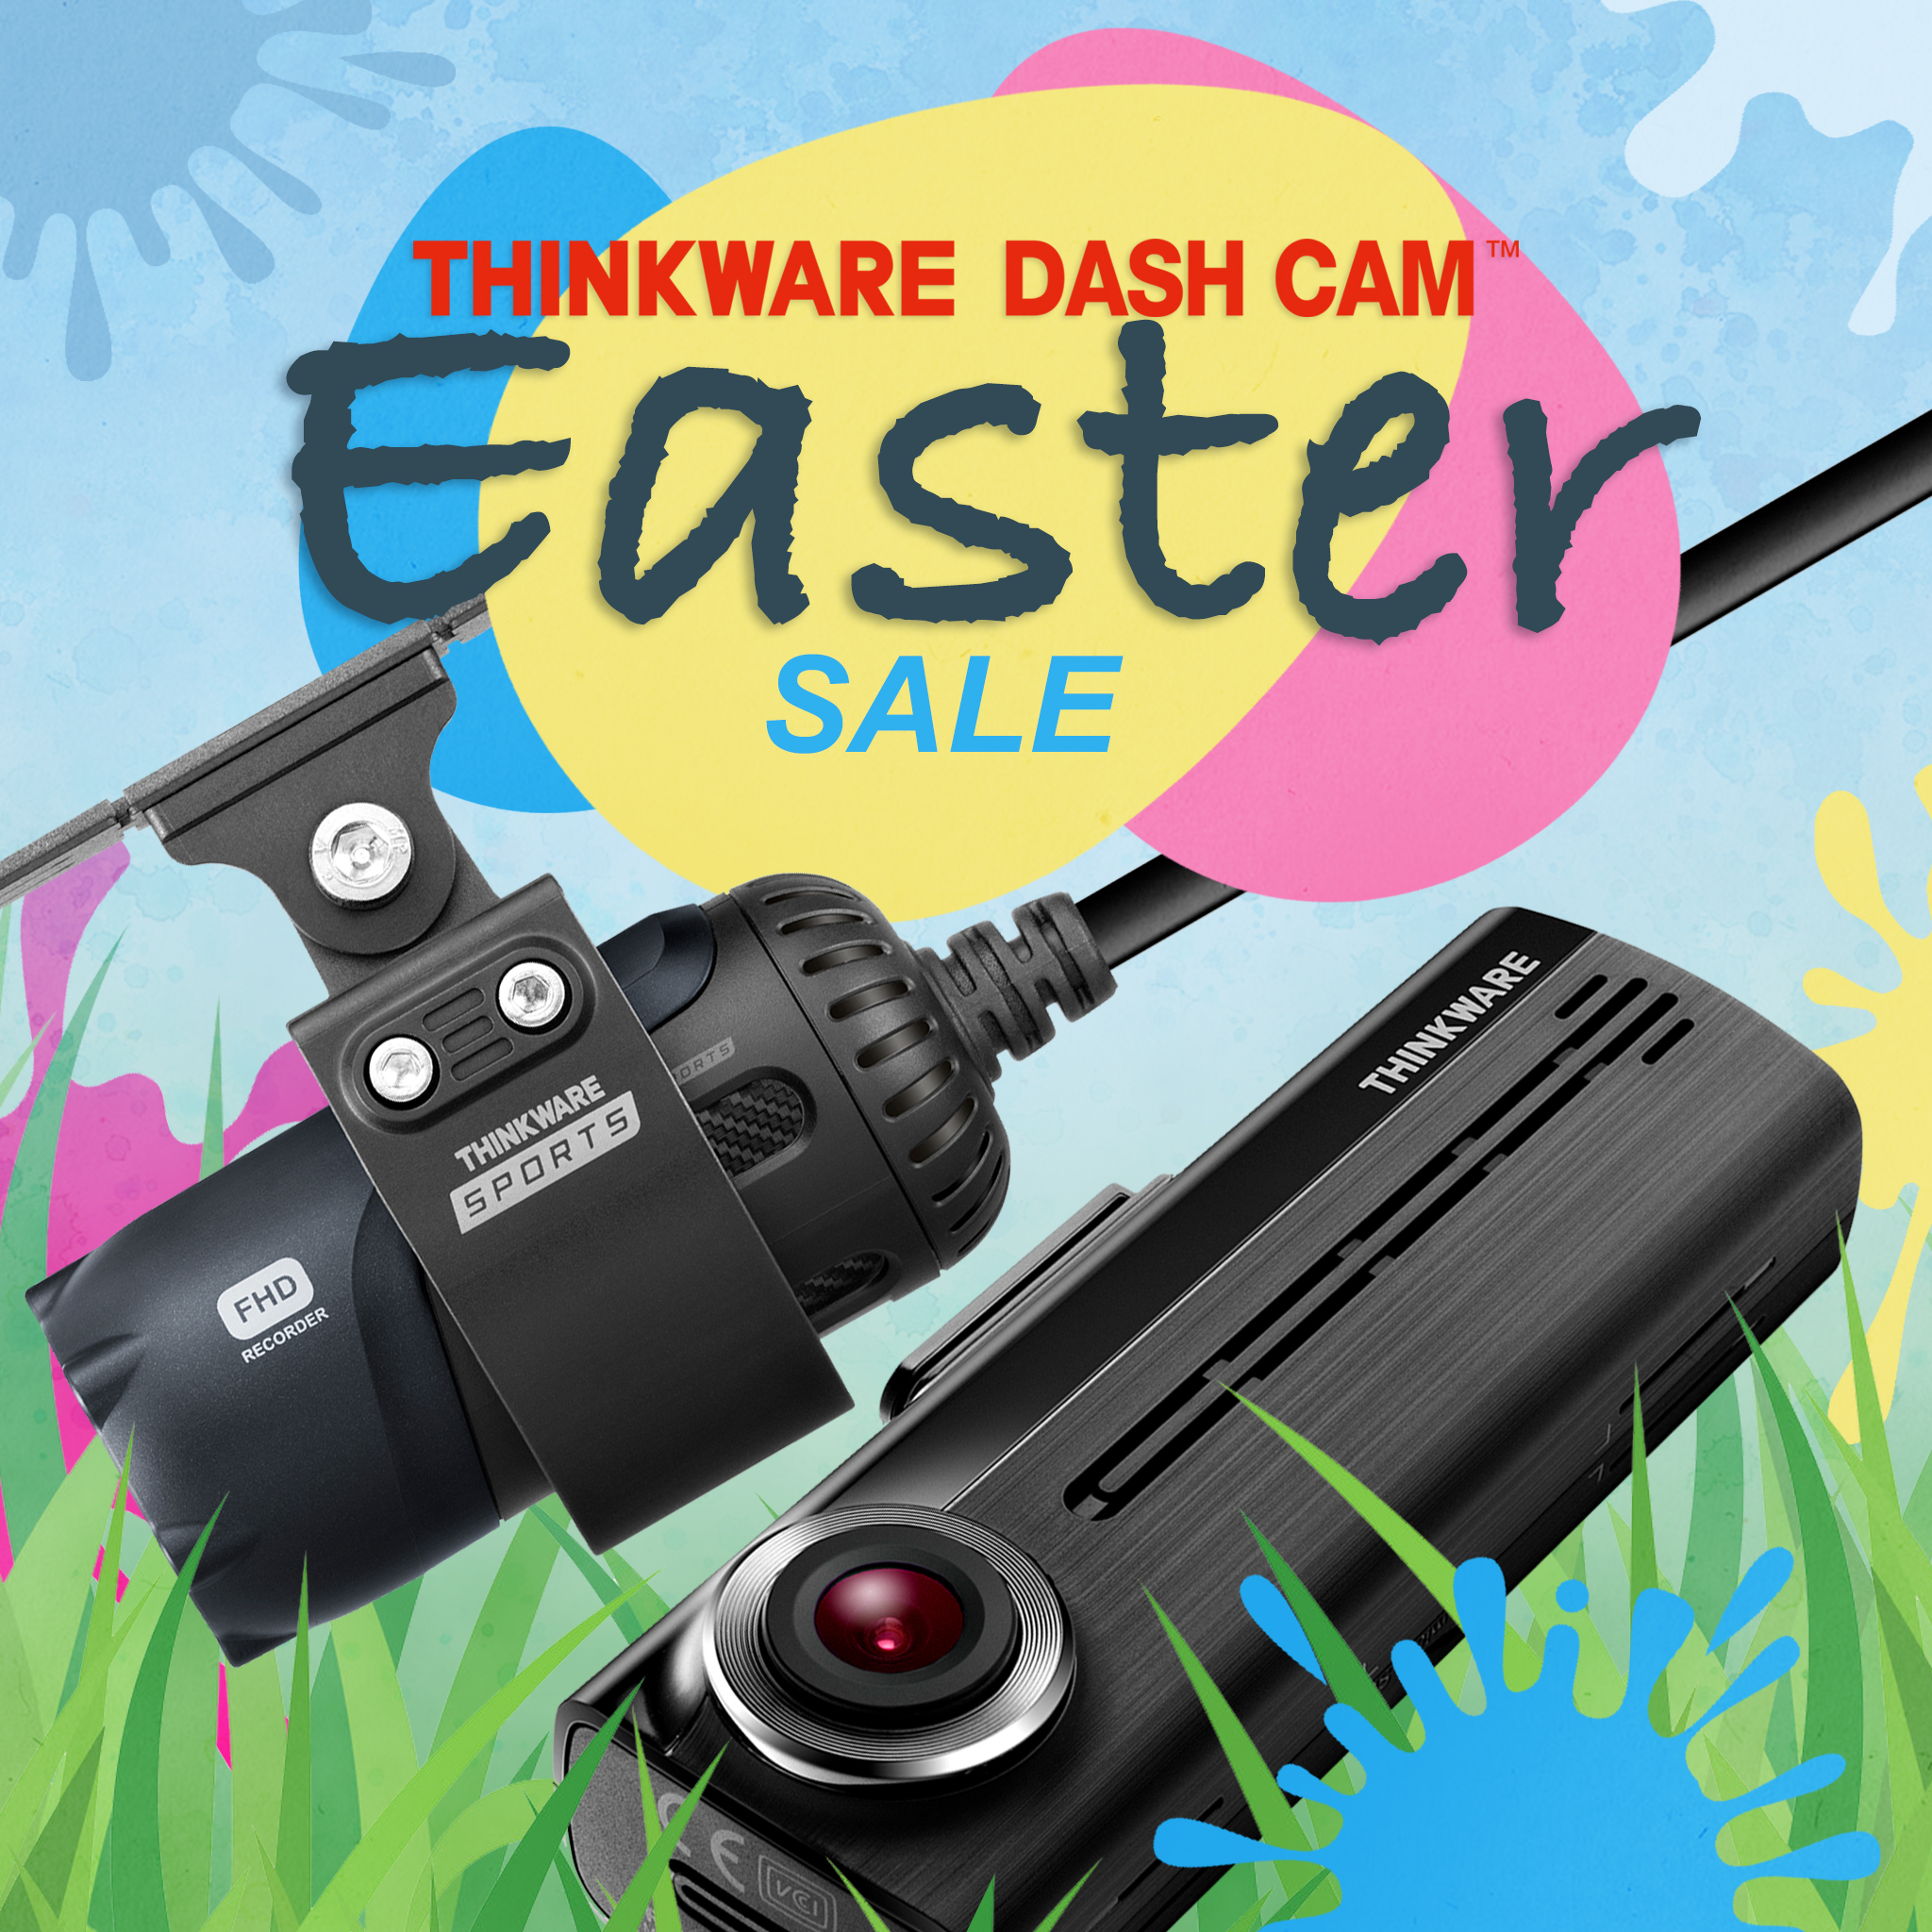 UK] THINKWARE Announces Easter Dash Cam Sales Promotions